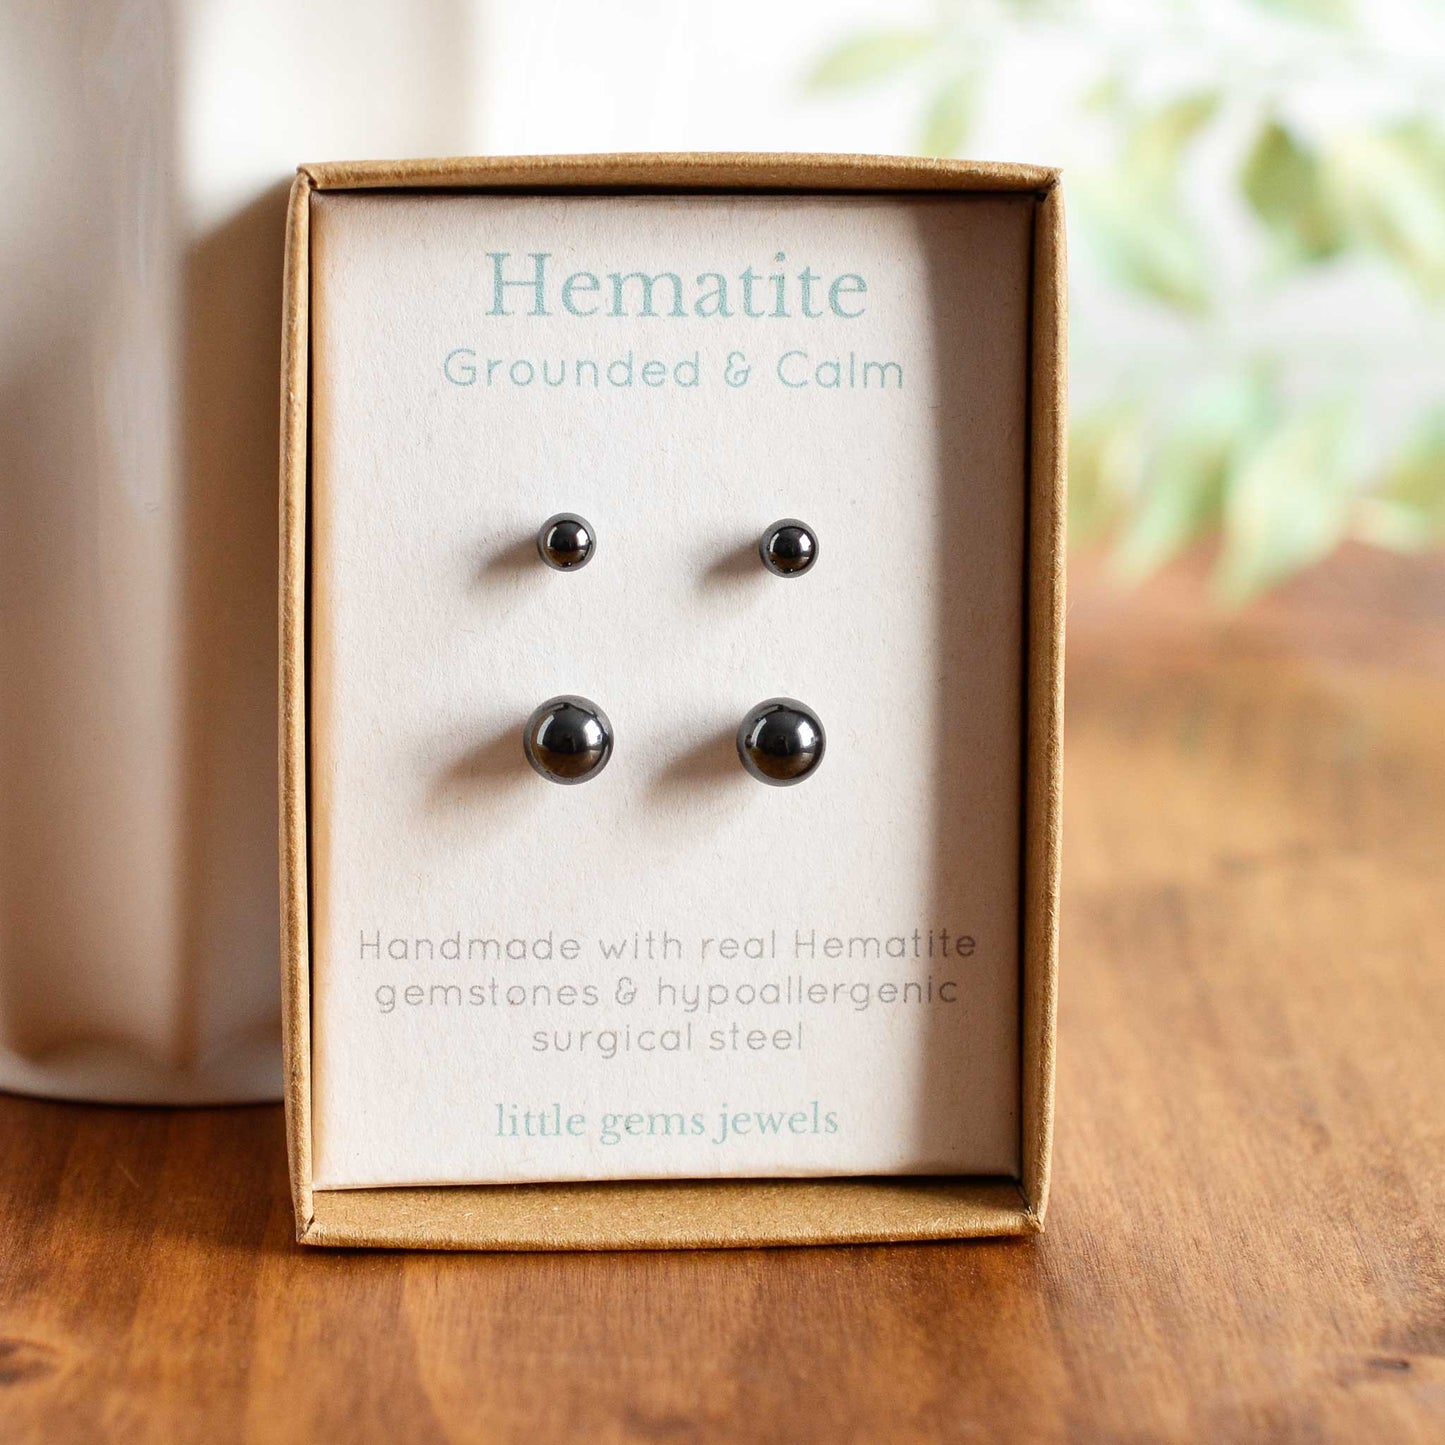 4mm & 6mm Hematite gemstone stud earrings in eco friendly gift box